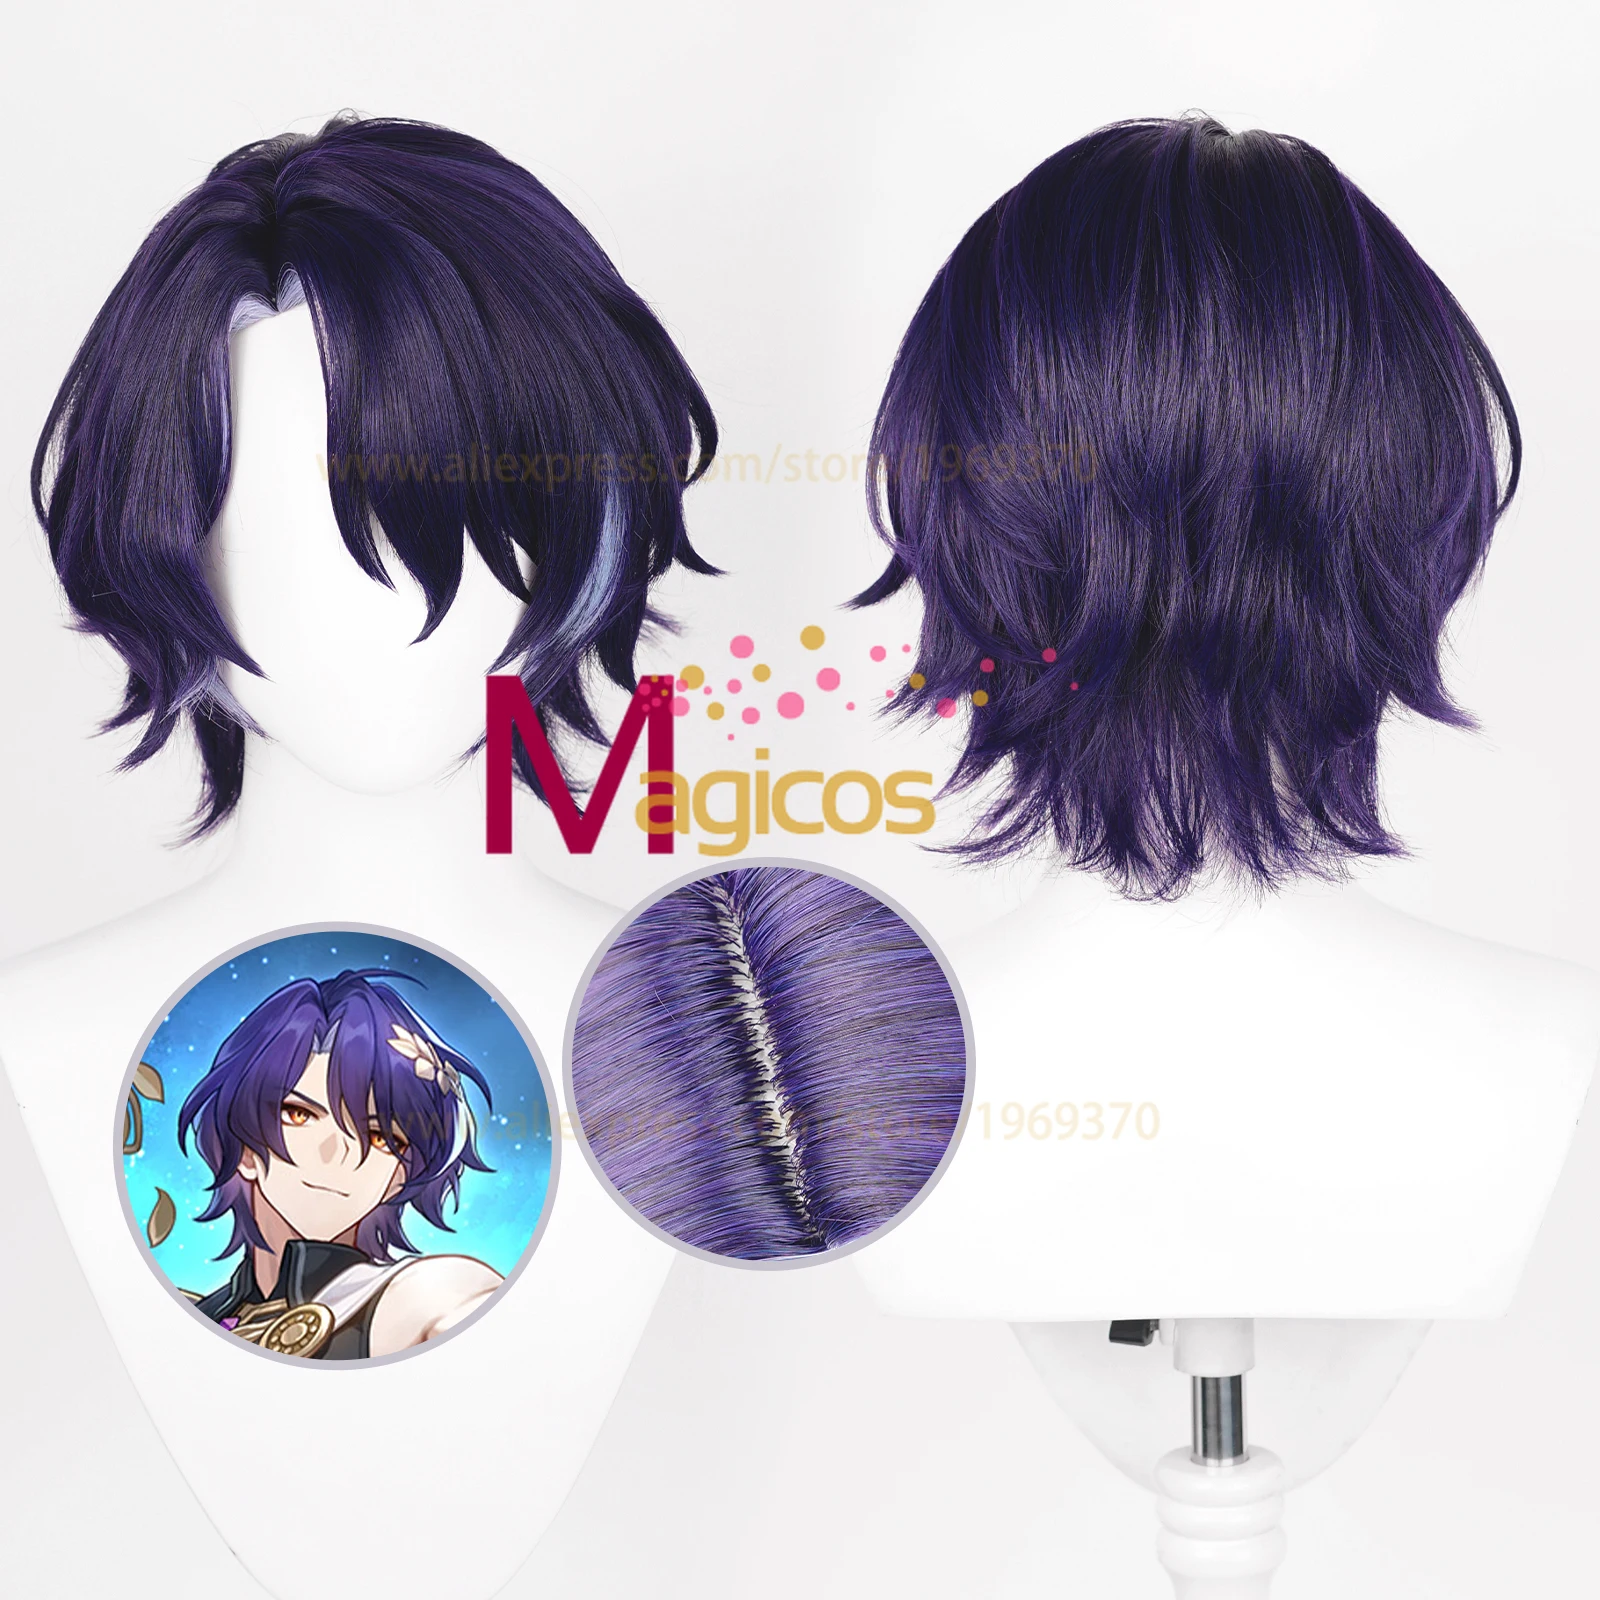 

Game HSR Dr. Ratio Cosplay Wig 33cm Short Purple Man Hair Anime Honkai Star Rail Dr Ratio Heat Resistant Synthetic Wigs